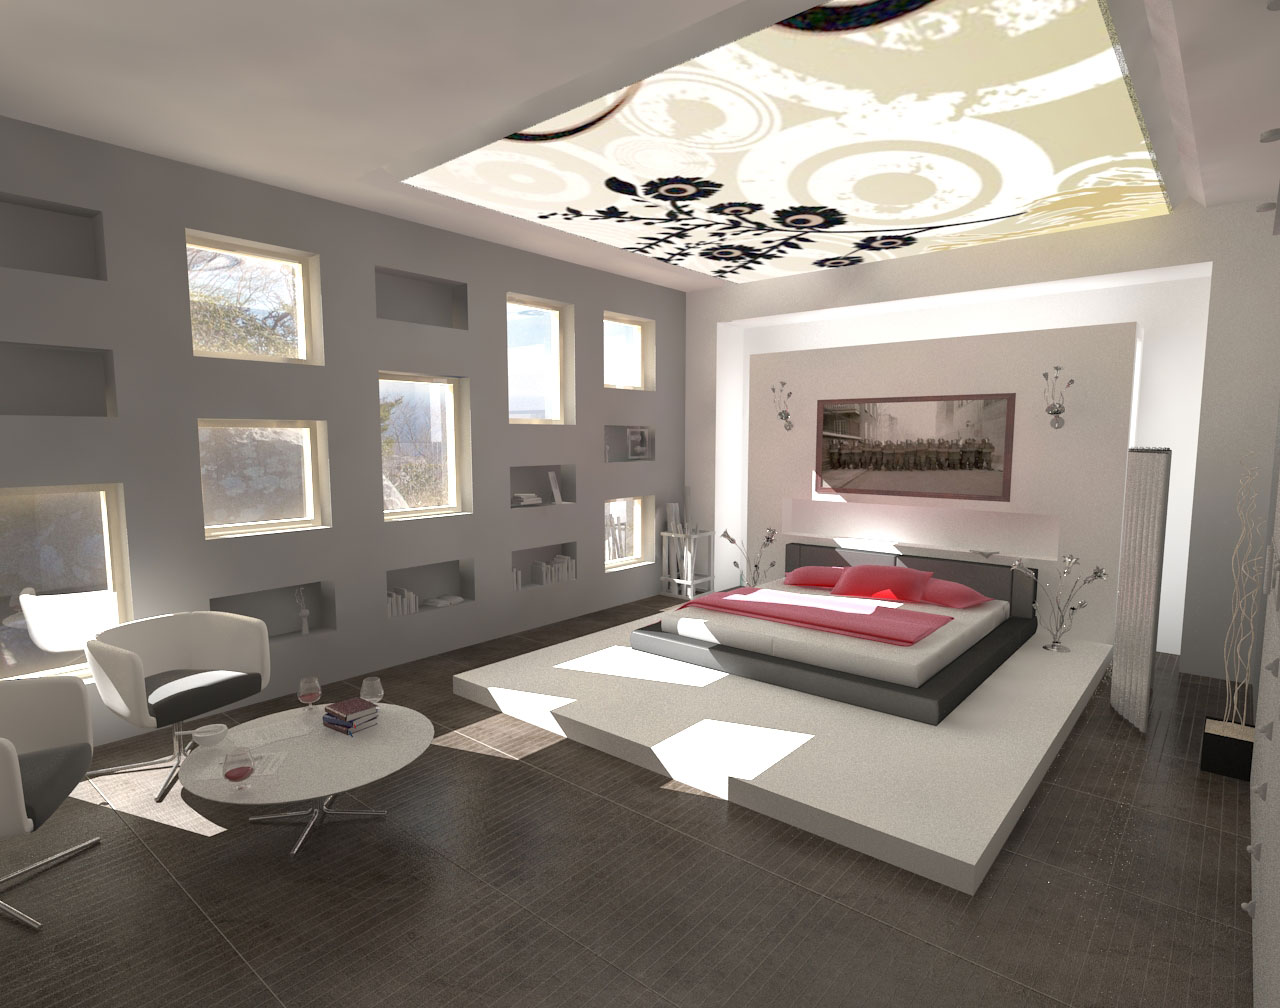 Decorations: Minimalist Design - Modern Bedroom Interior ...